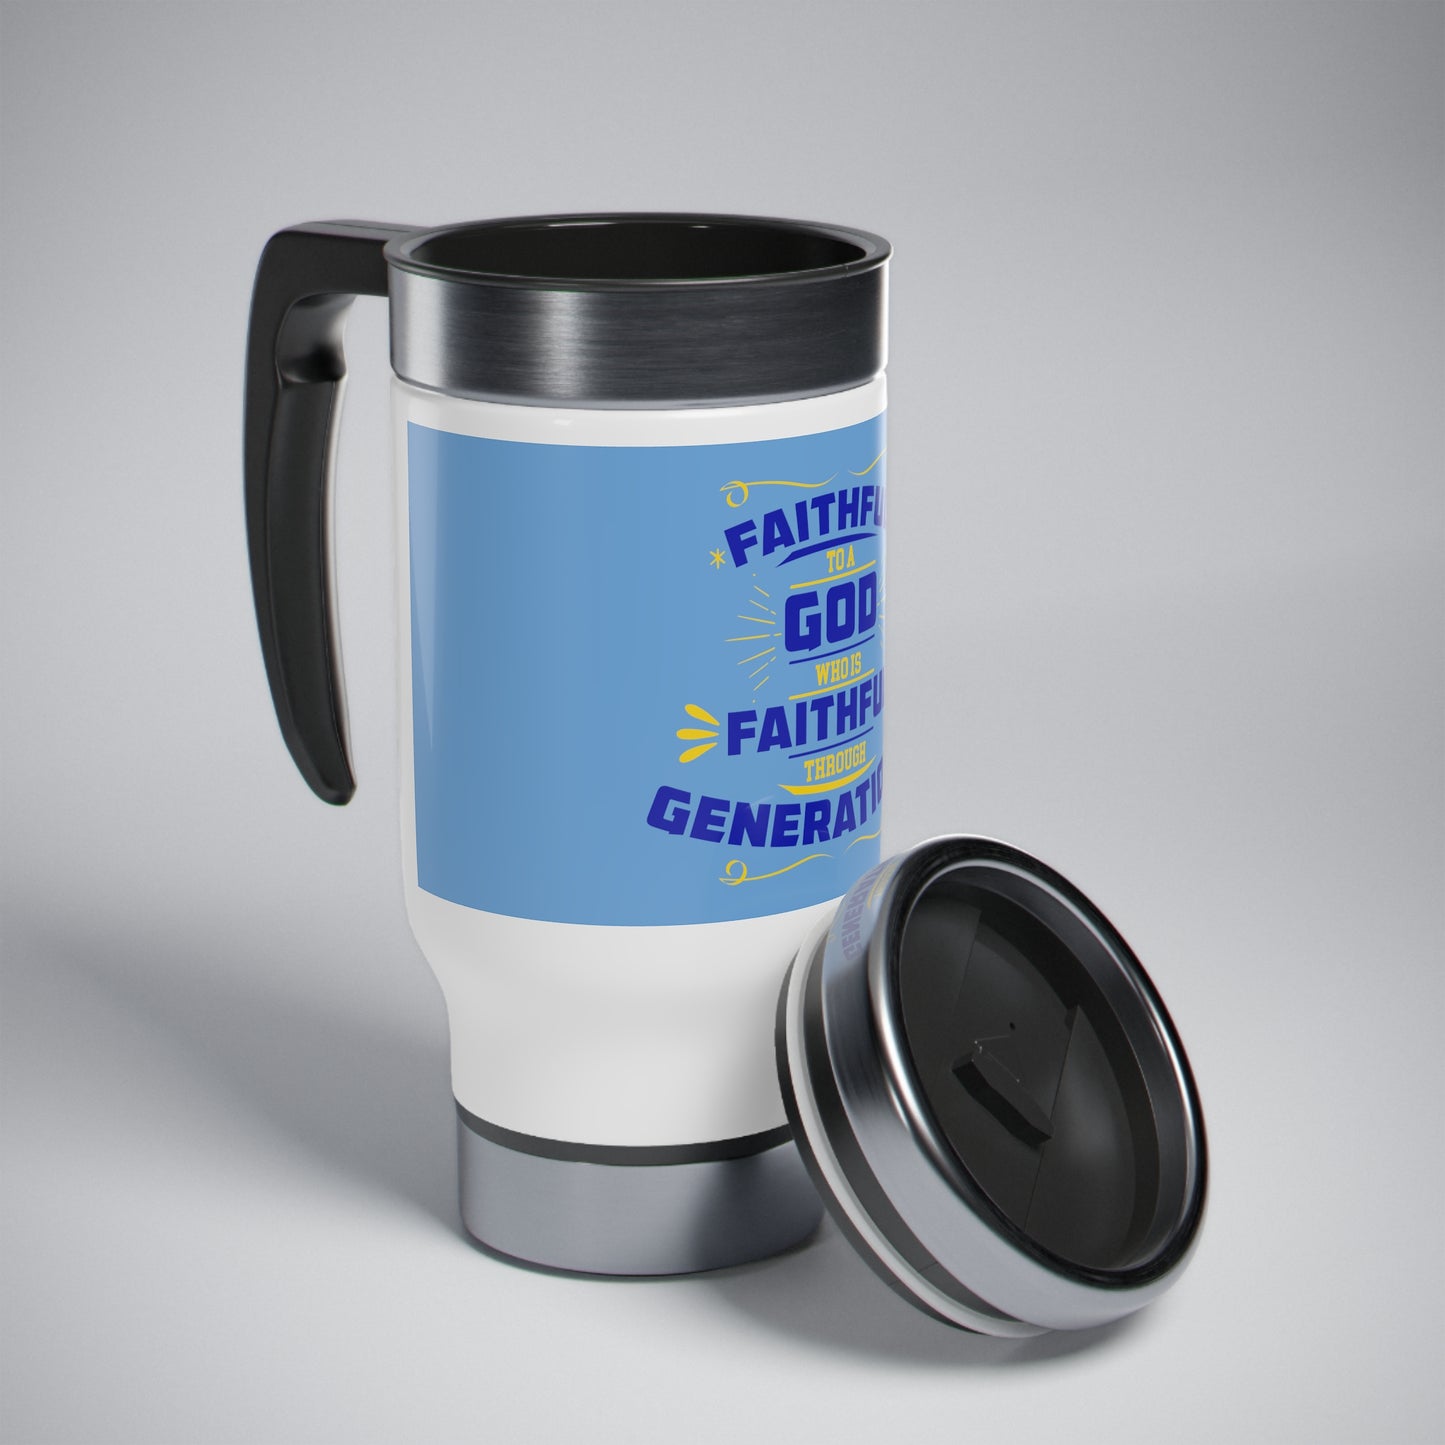 Faithful To A God Who Is Faithful Through Generations Travel Mug with Handle, 14oz